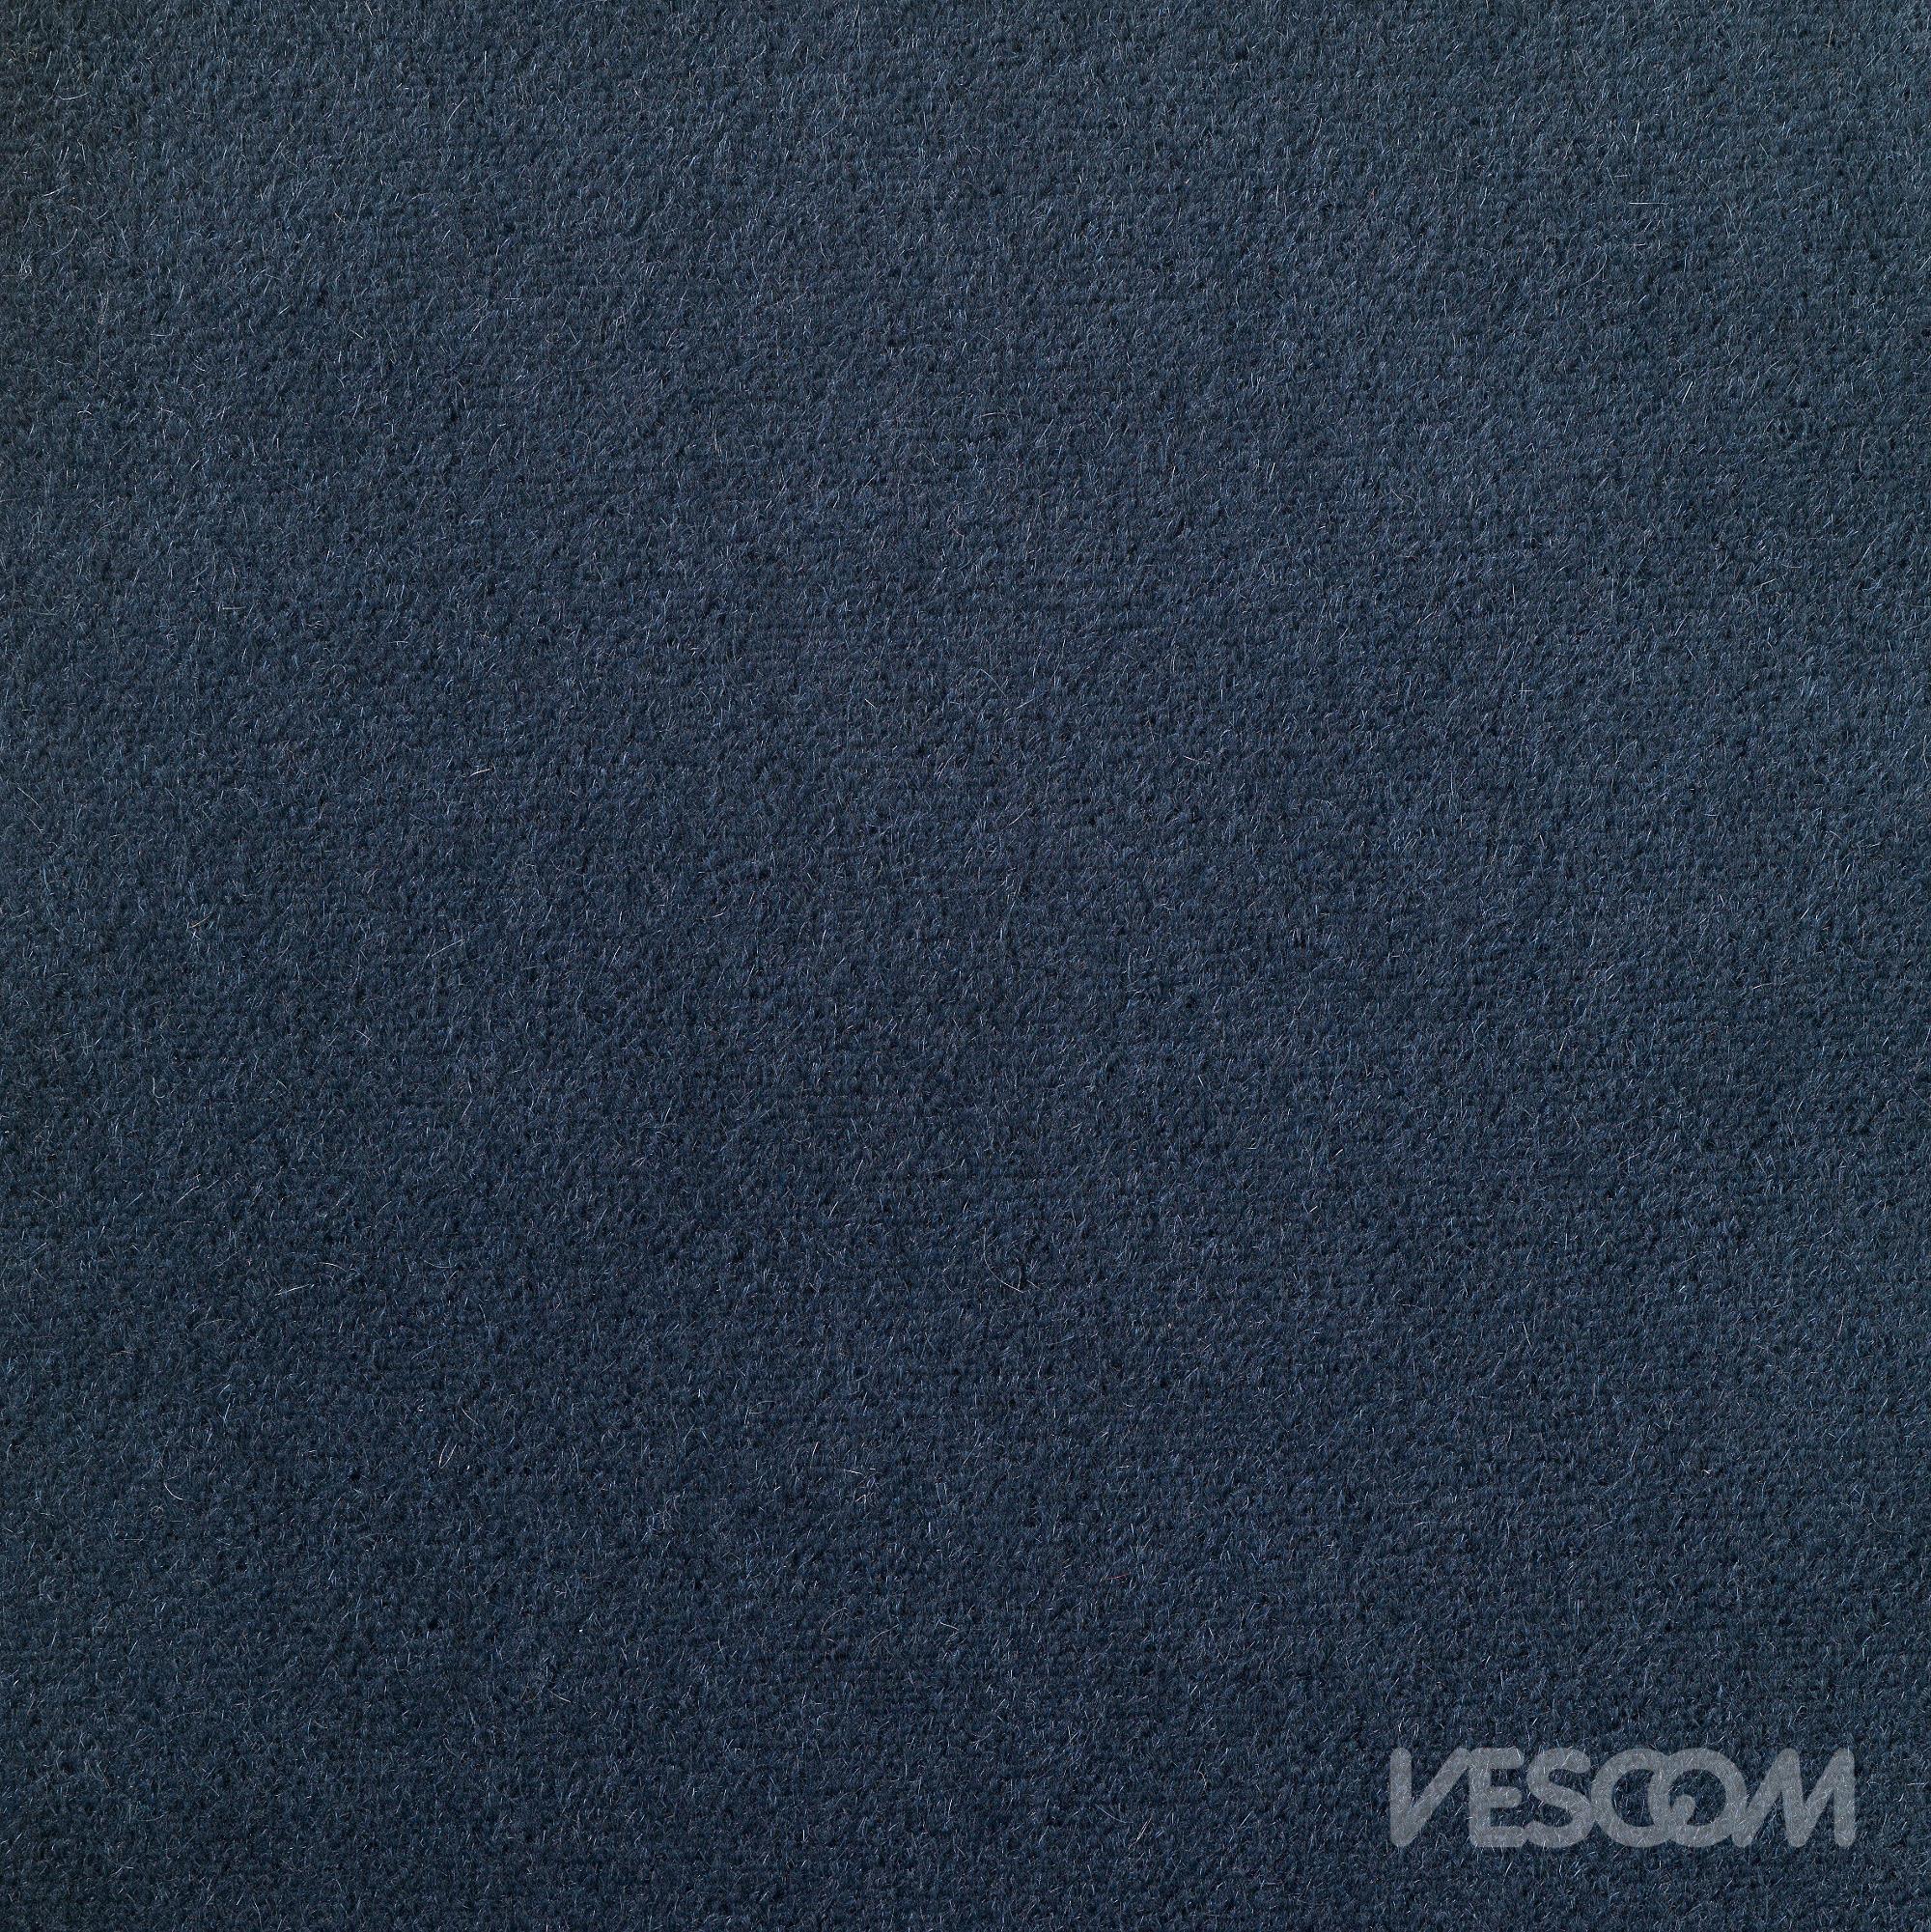 Vescom Ariana Upholstery Fabric 7061.11